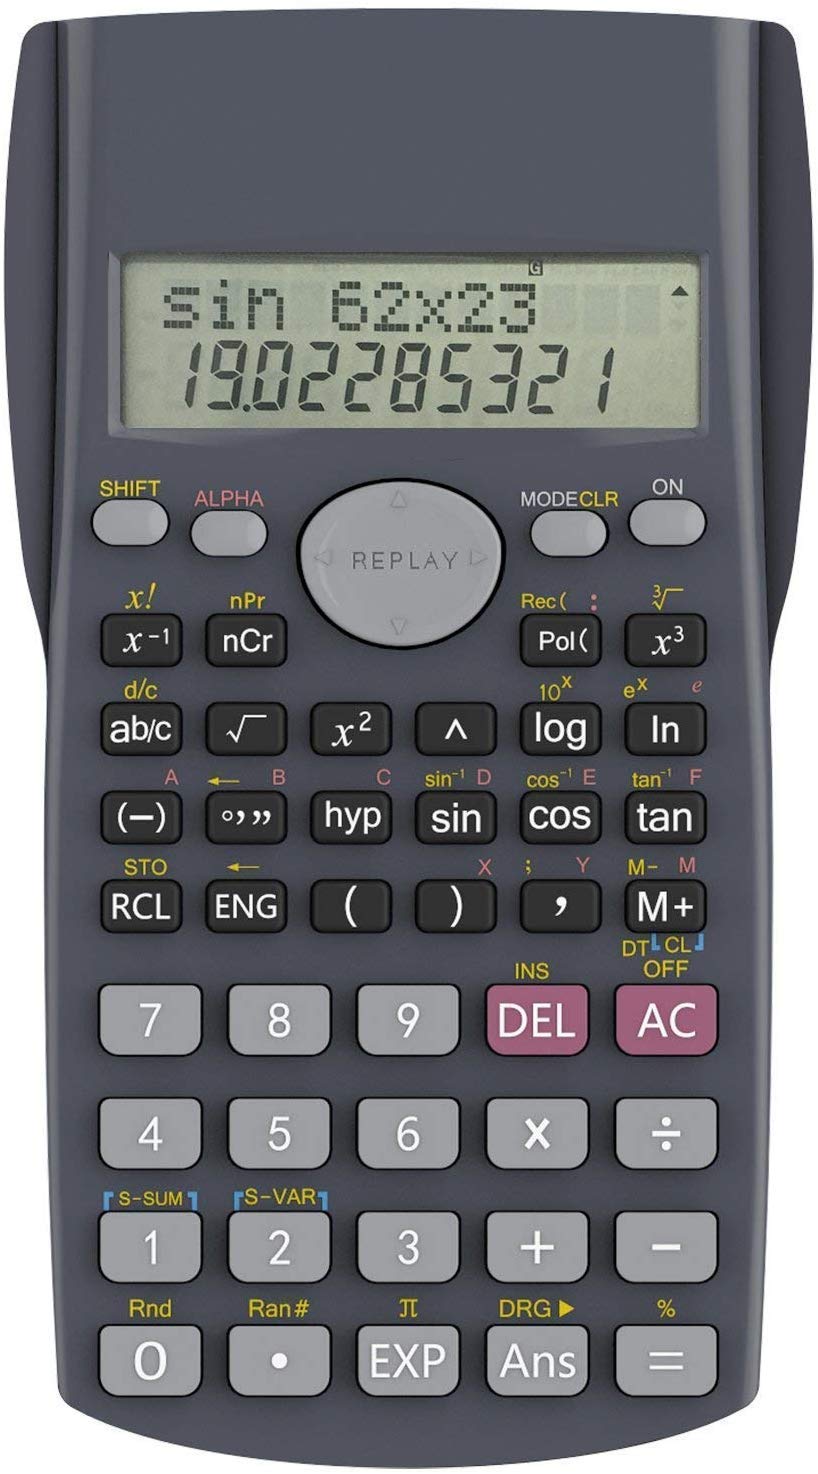 SAT/AP Test Engineering Scientific Calculator